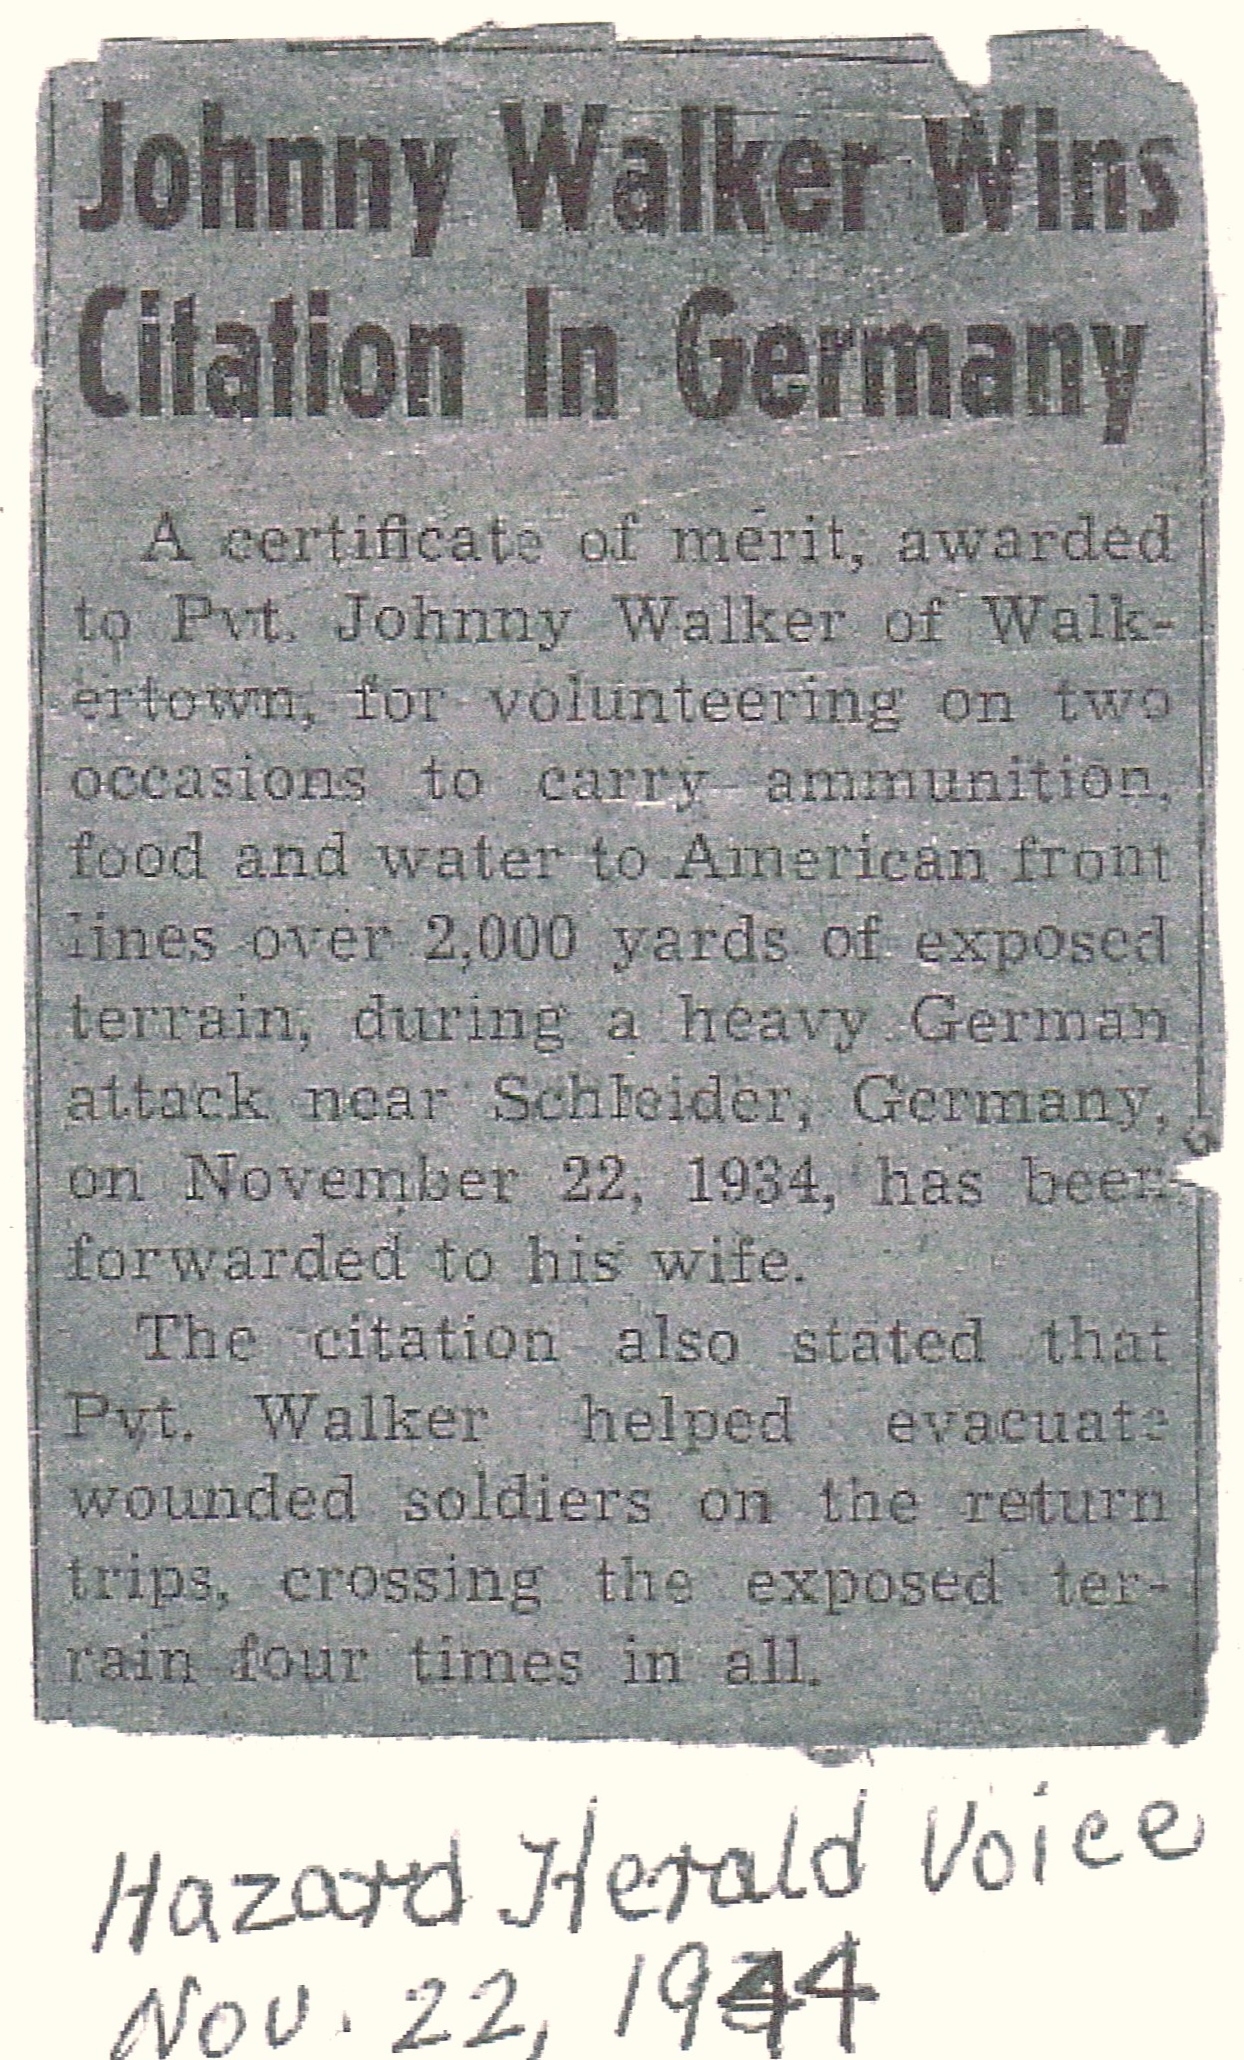 Johnny Walker Wins Citation in Germany